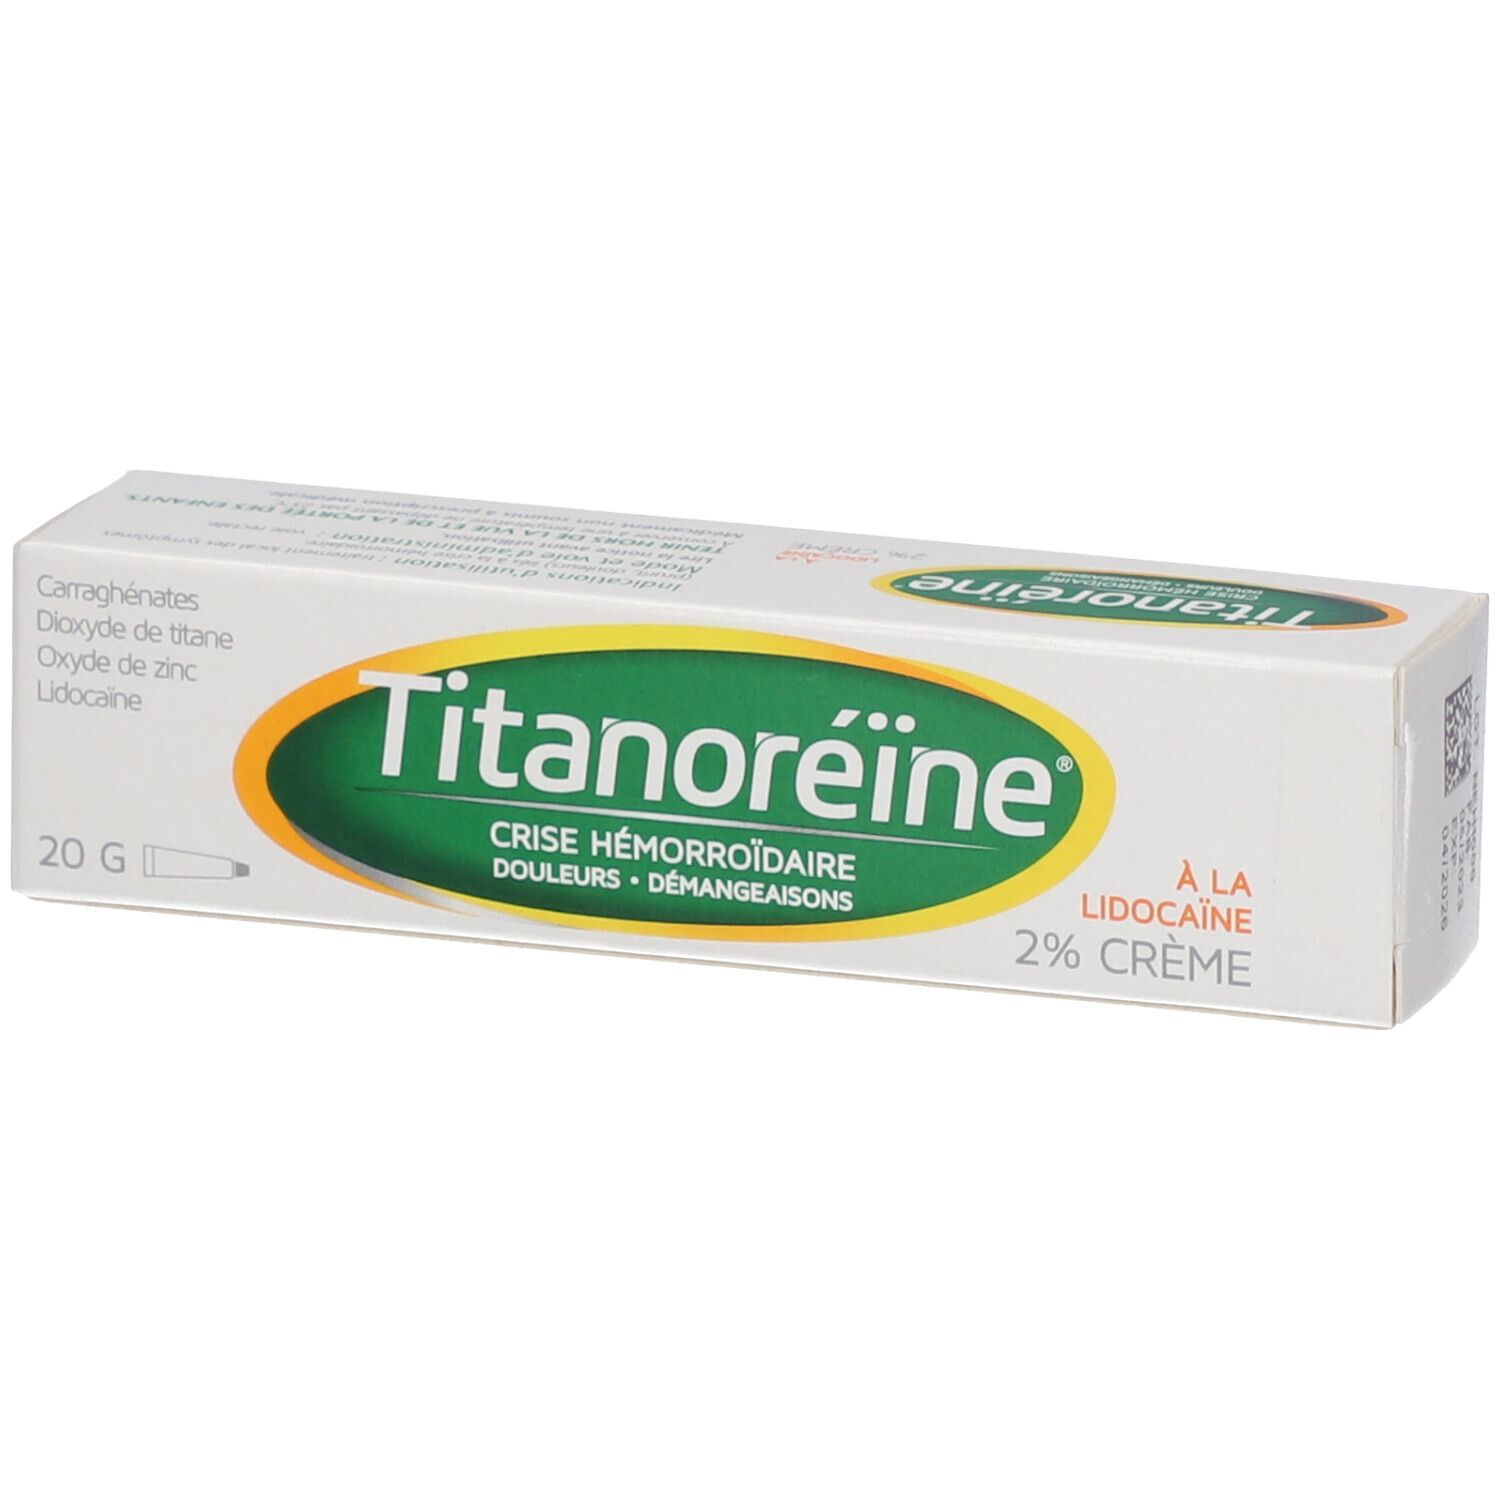 Titanoreïne® Lidocaïne crème 2 %